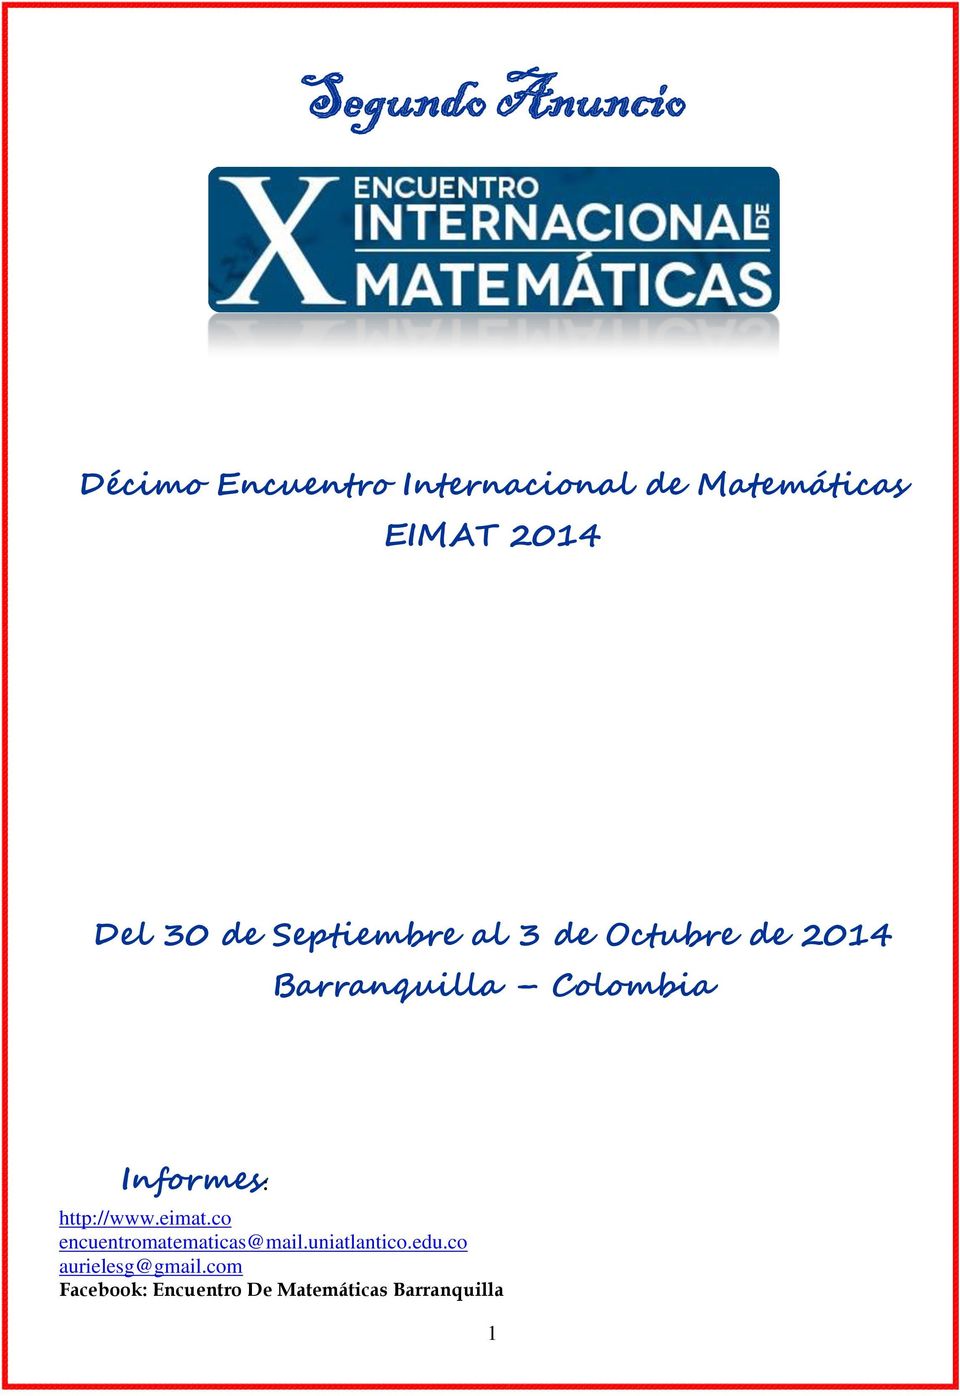 Informes: http://www.eimat.co encuentromatematicas@mail.uniatlantico.